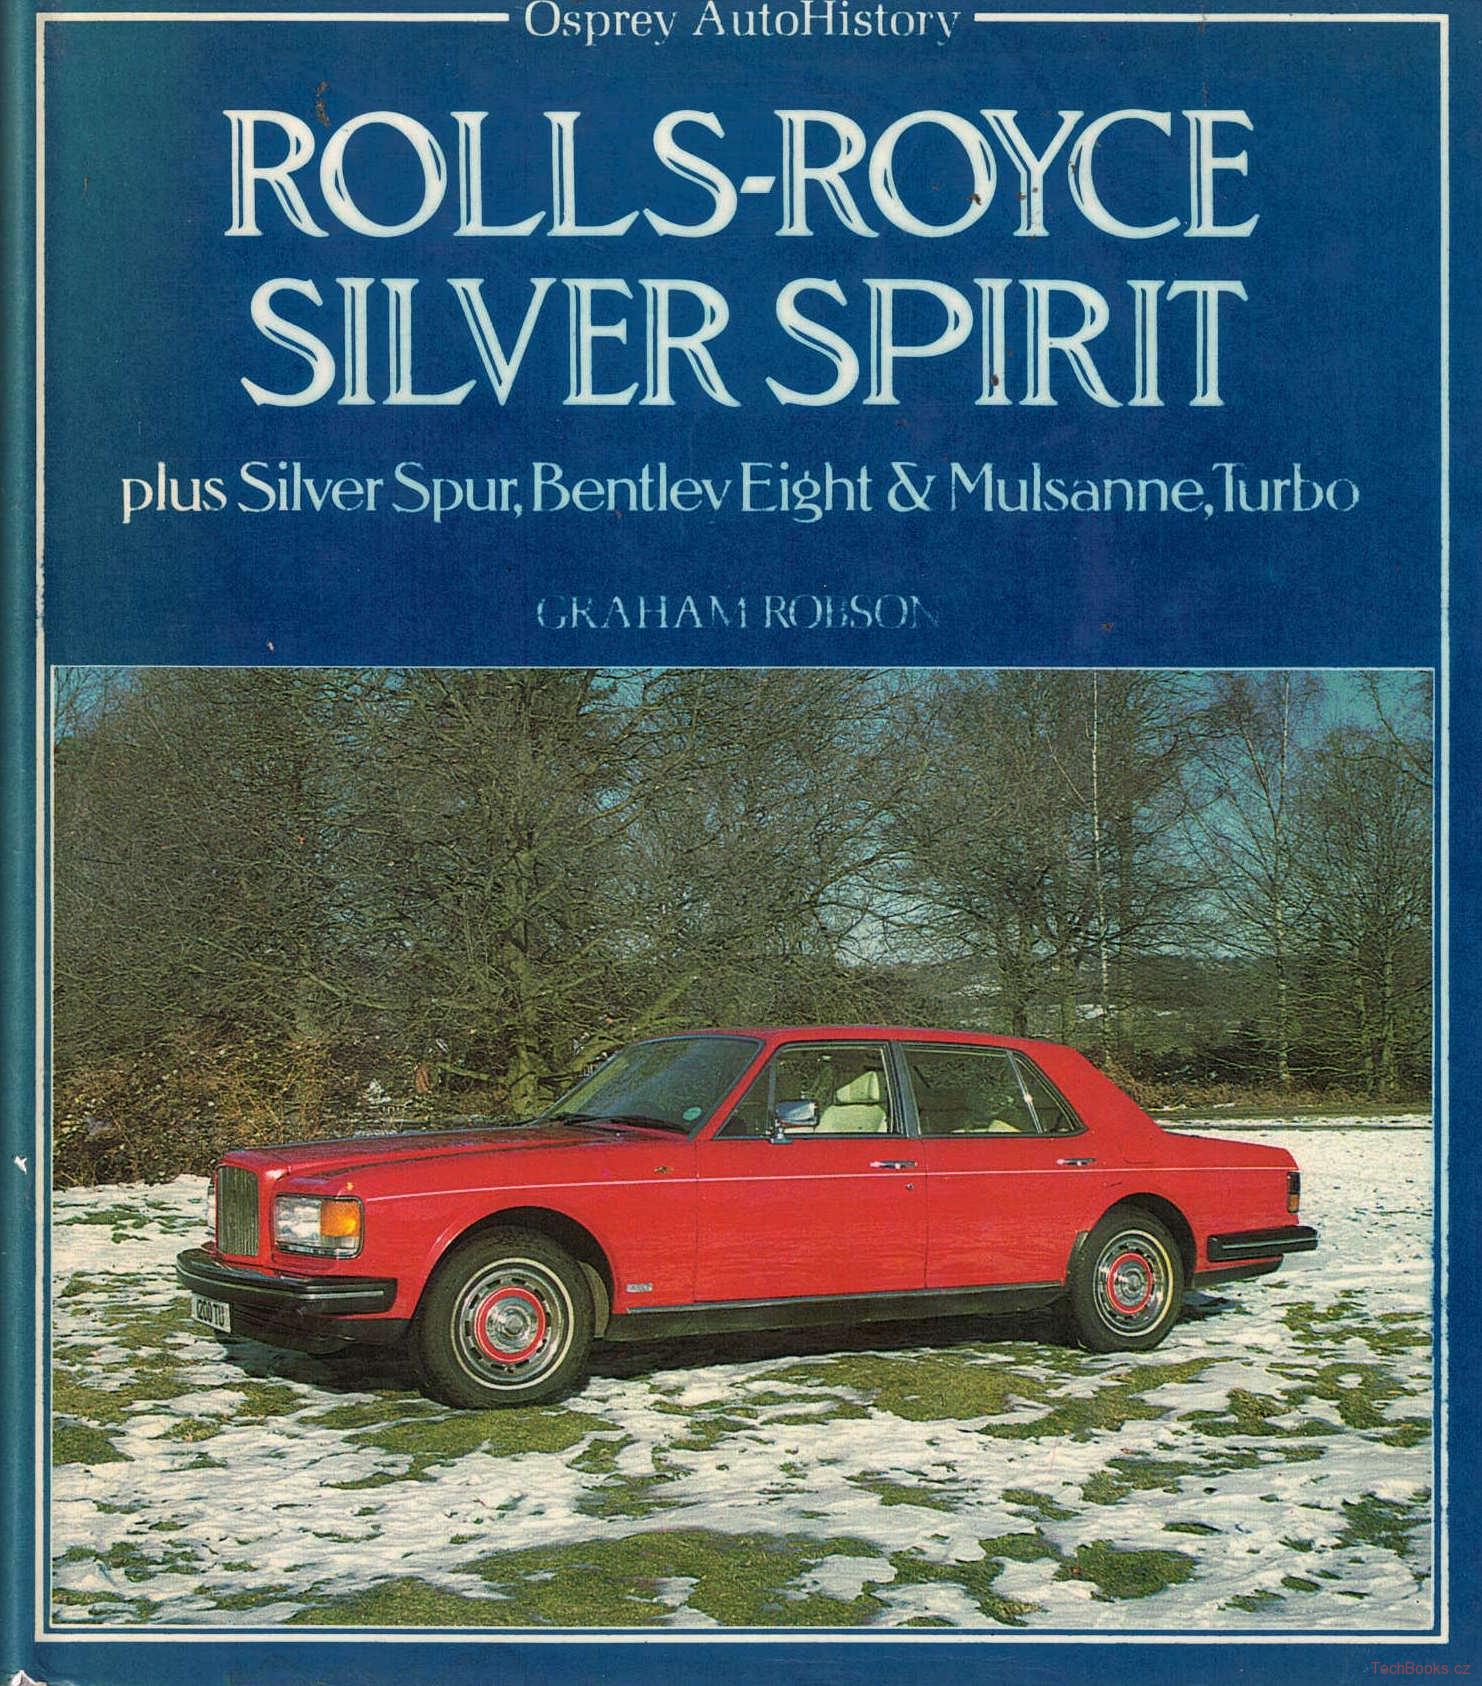 Rolls-Royce Silver Spirit plus Silver Spur, Bentley Eight & Mulsanne, Turbo